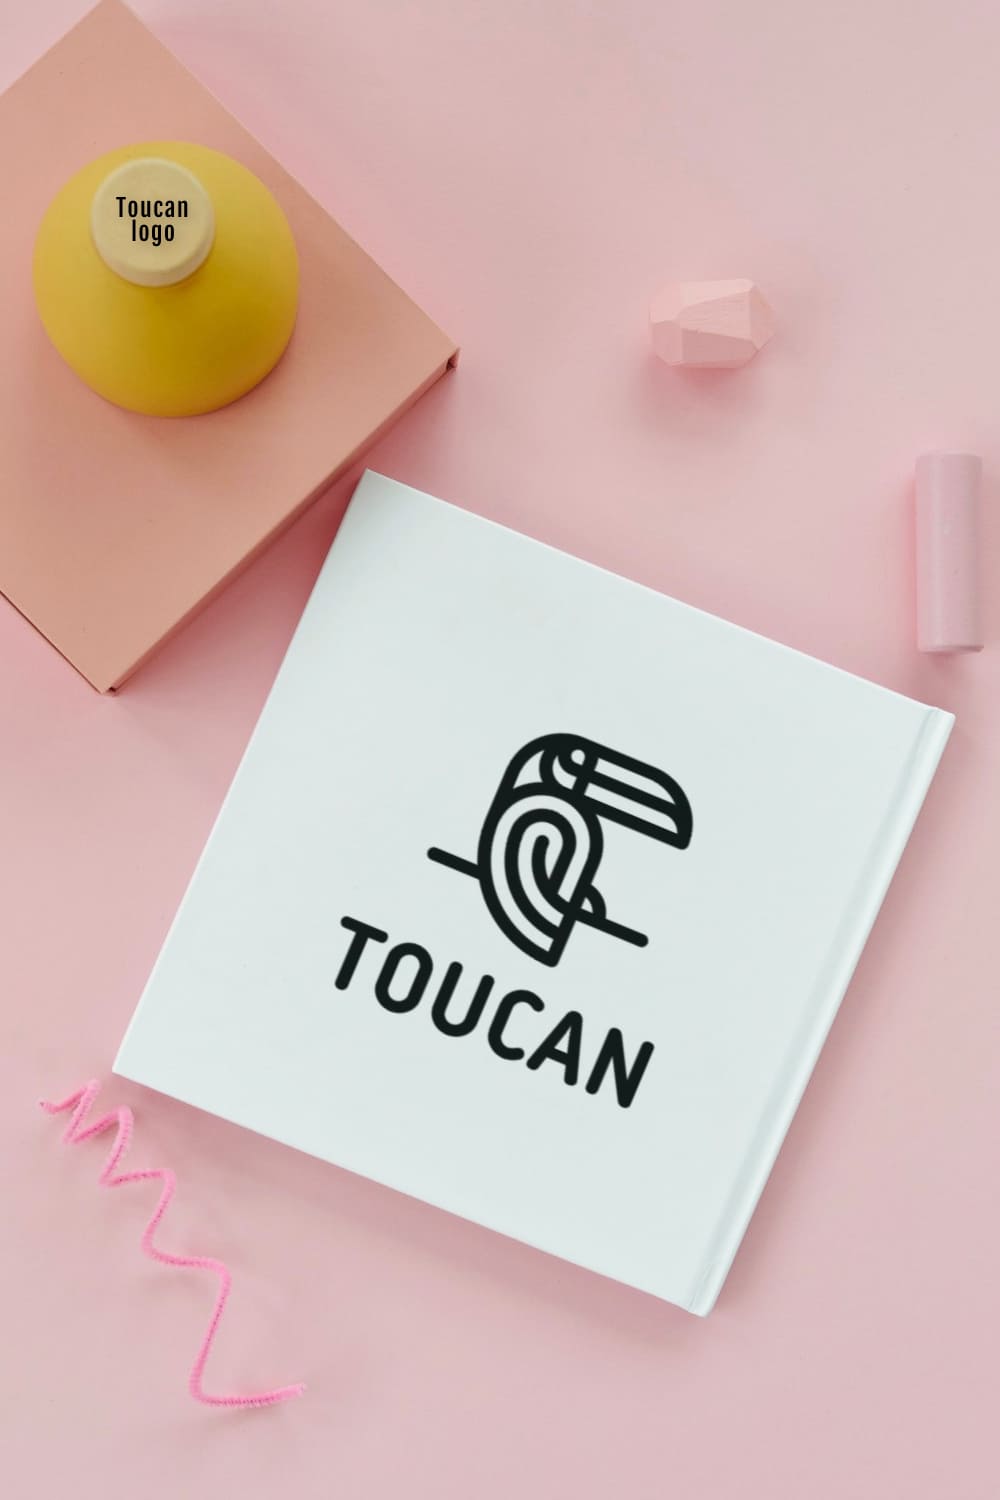 Toucan Logo Design Template pinterest image.